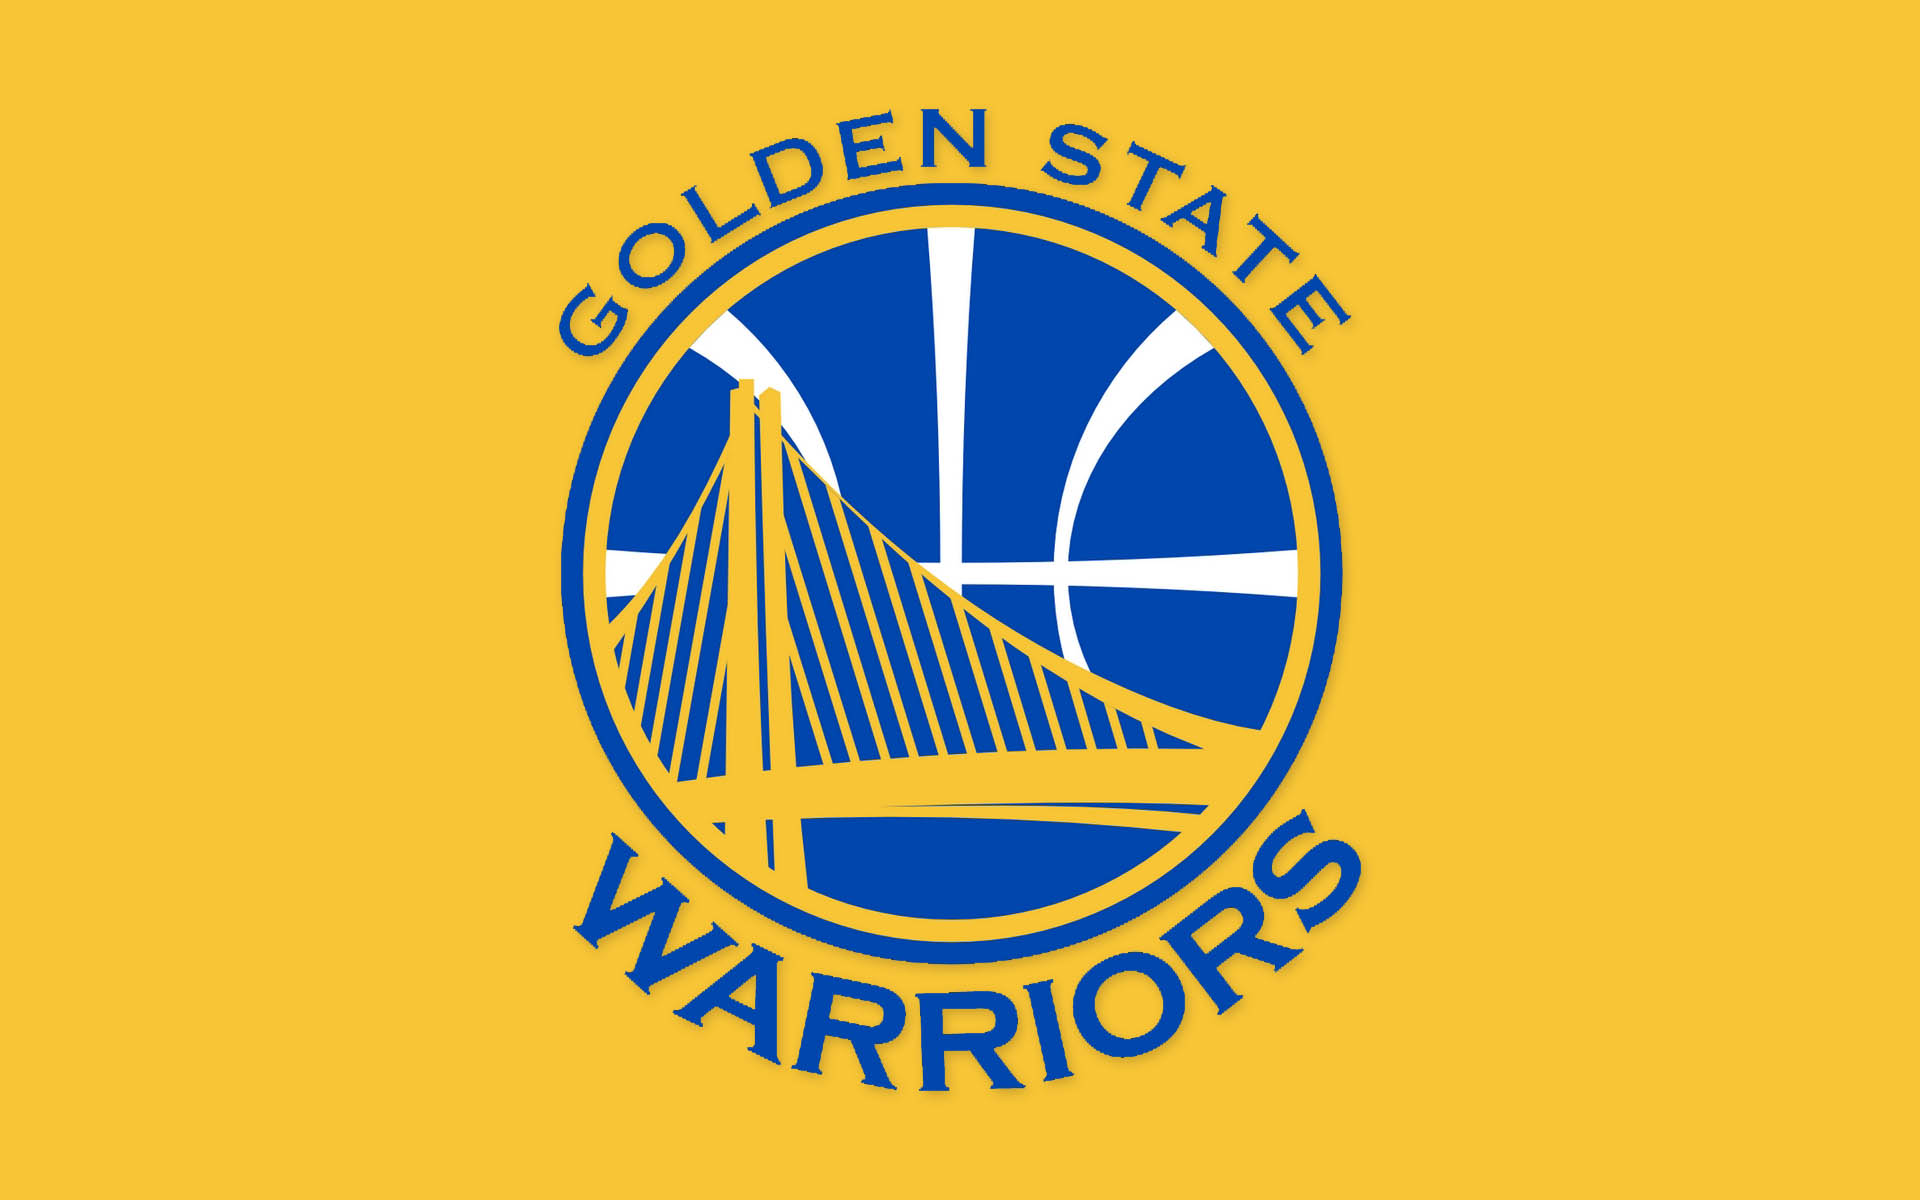 GOLDEN STATE WARRIORS Nba Basketball logo over yellow background Wallpapers HD / Desktop and